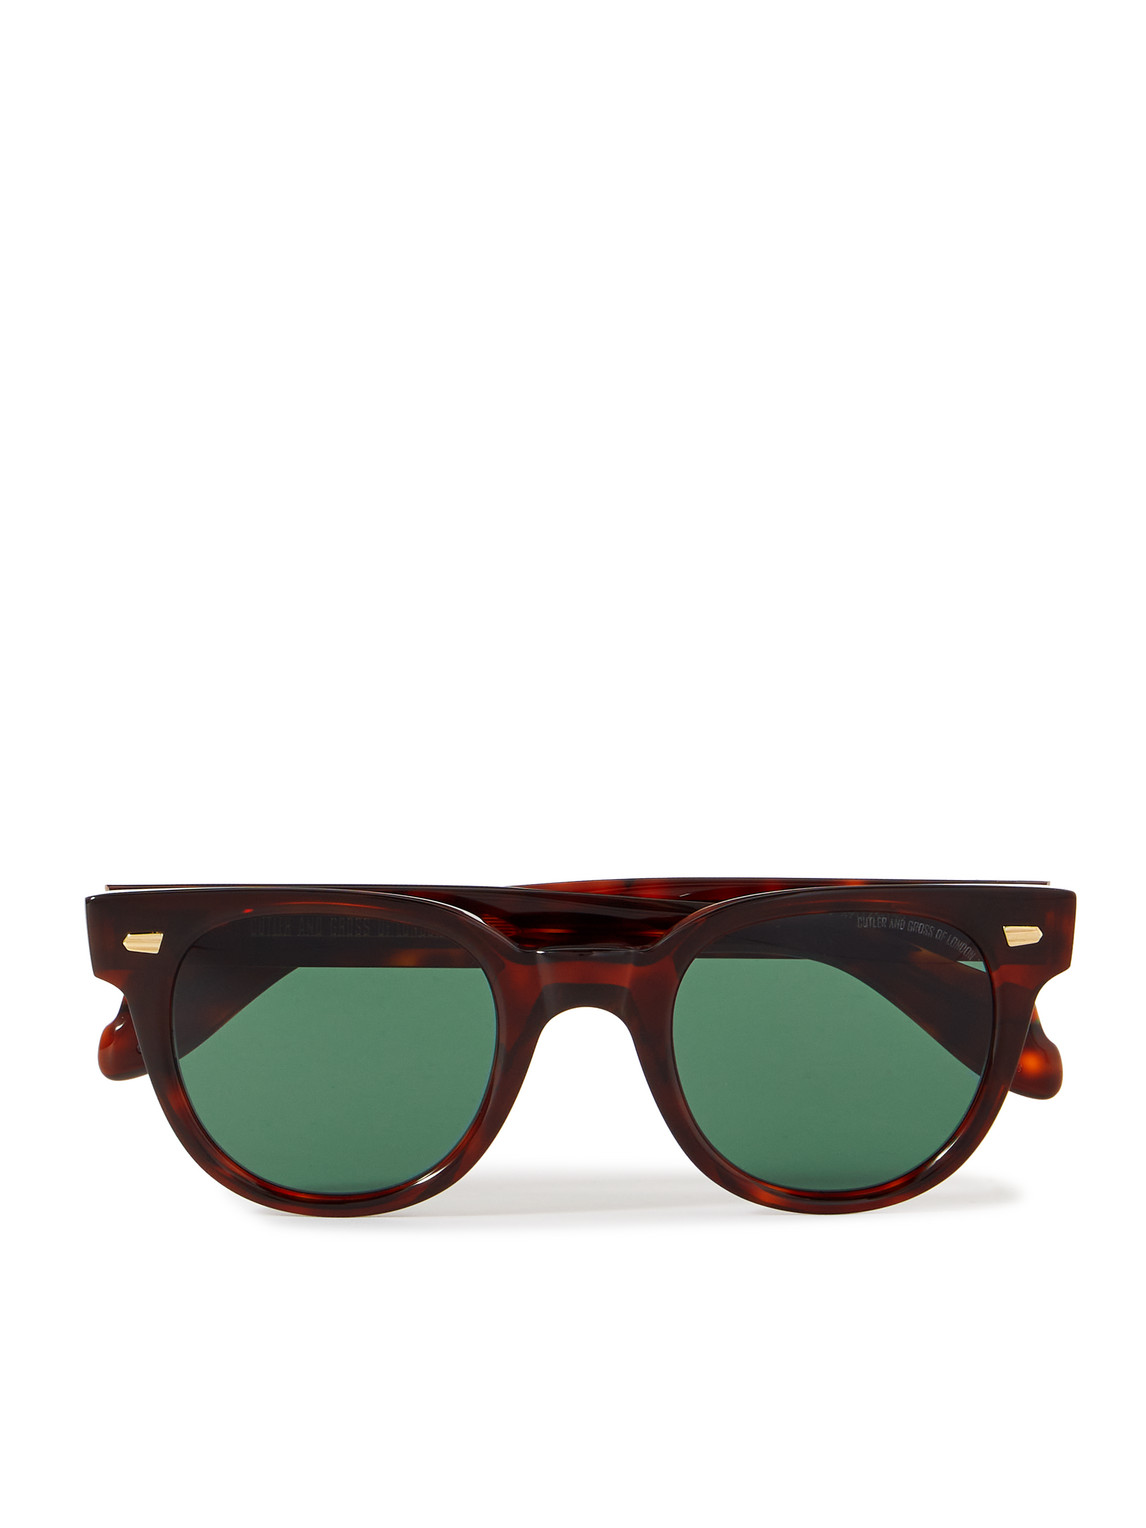 Cutler And Gross 1392 Round-frame Tortoiseshell Acetate Sunglasses